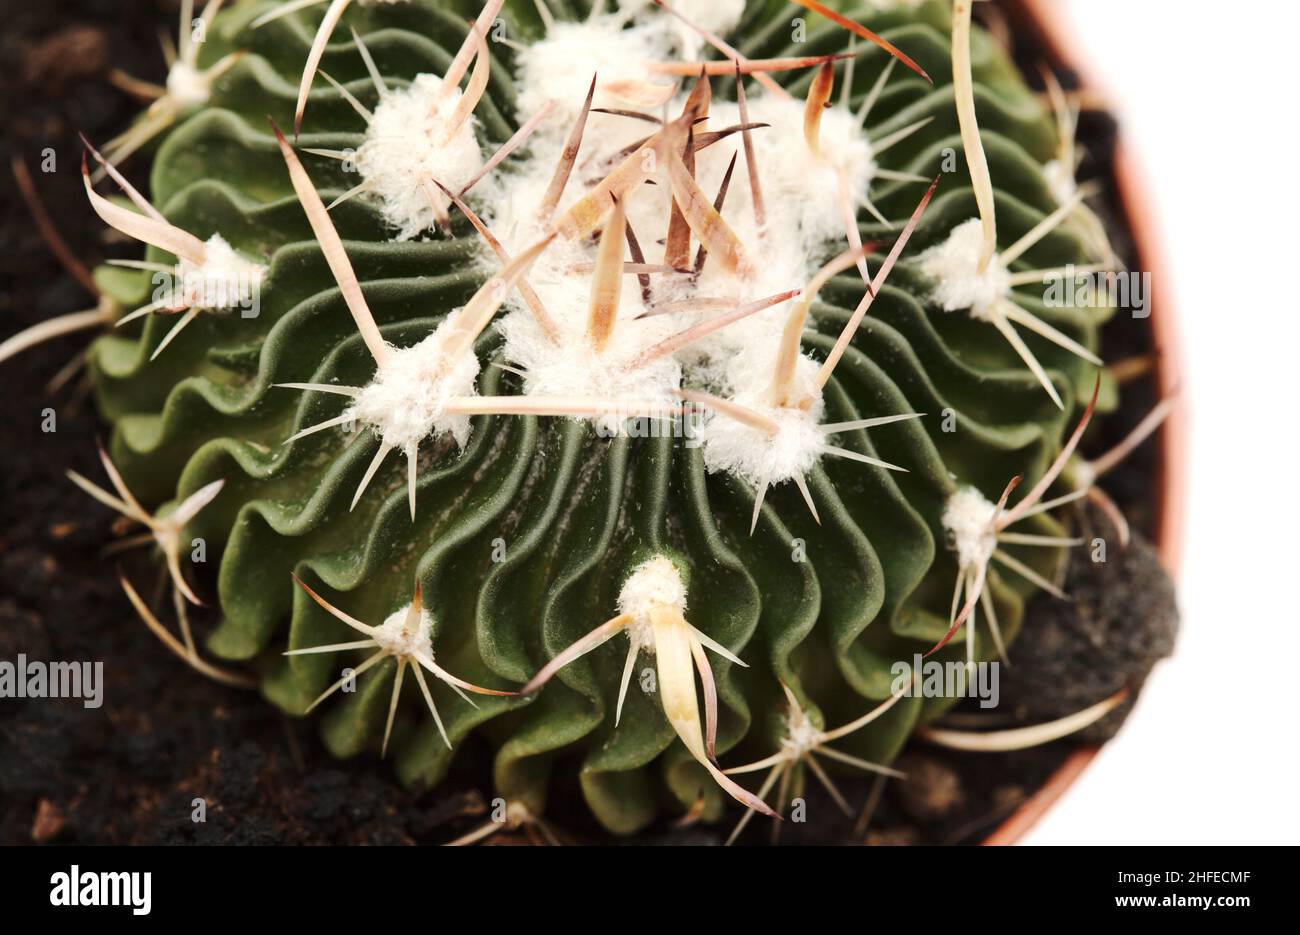 Stenocactus multicostatus, the brain cactus, small cactus with unusual wavy ribs natural macro floral background Stock Photo